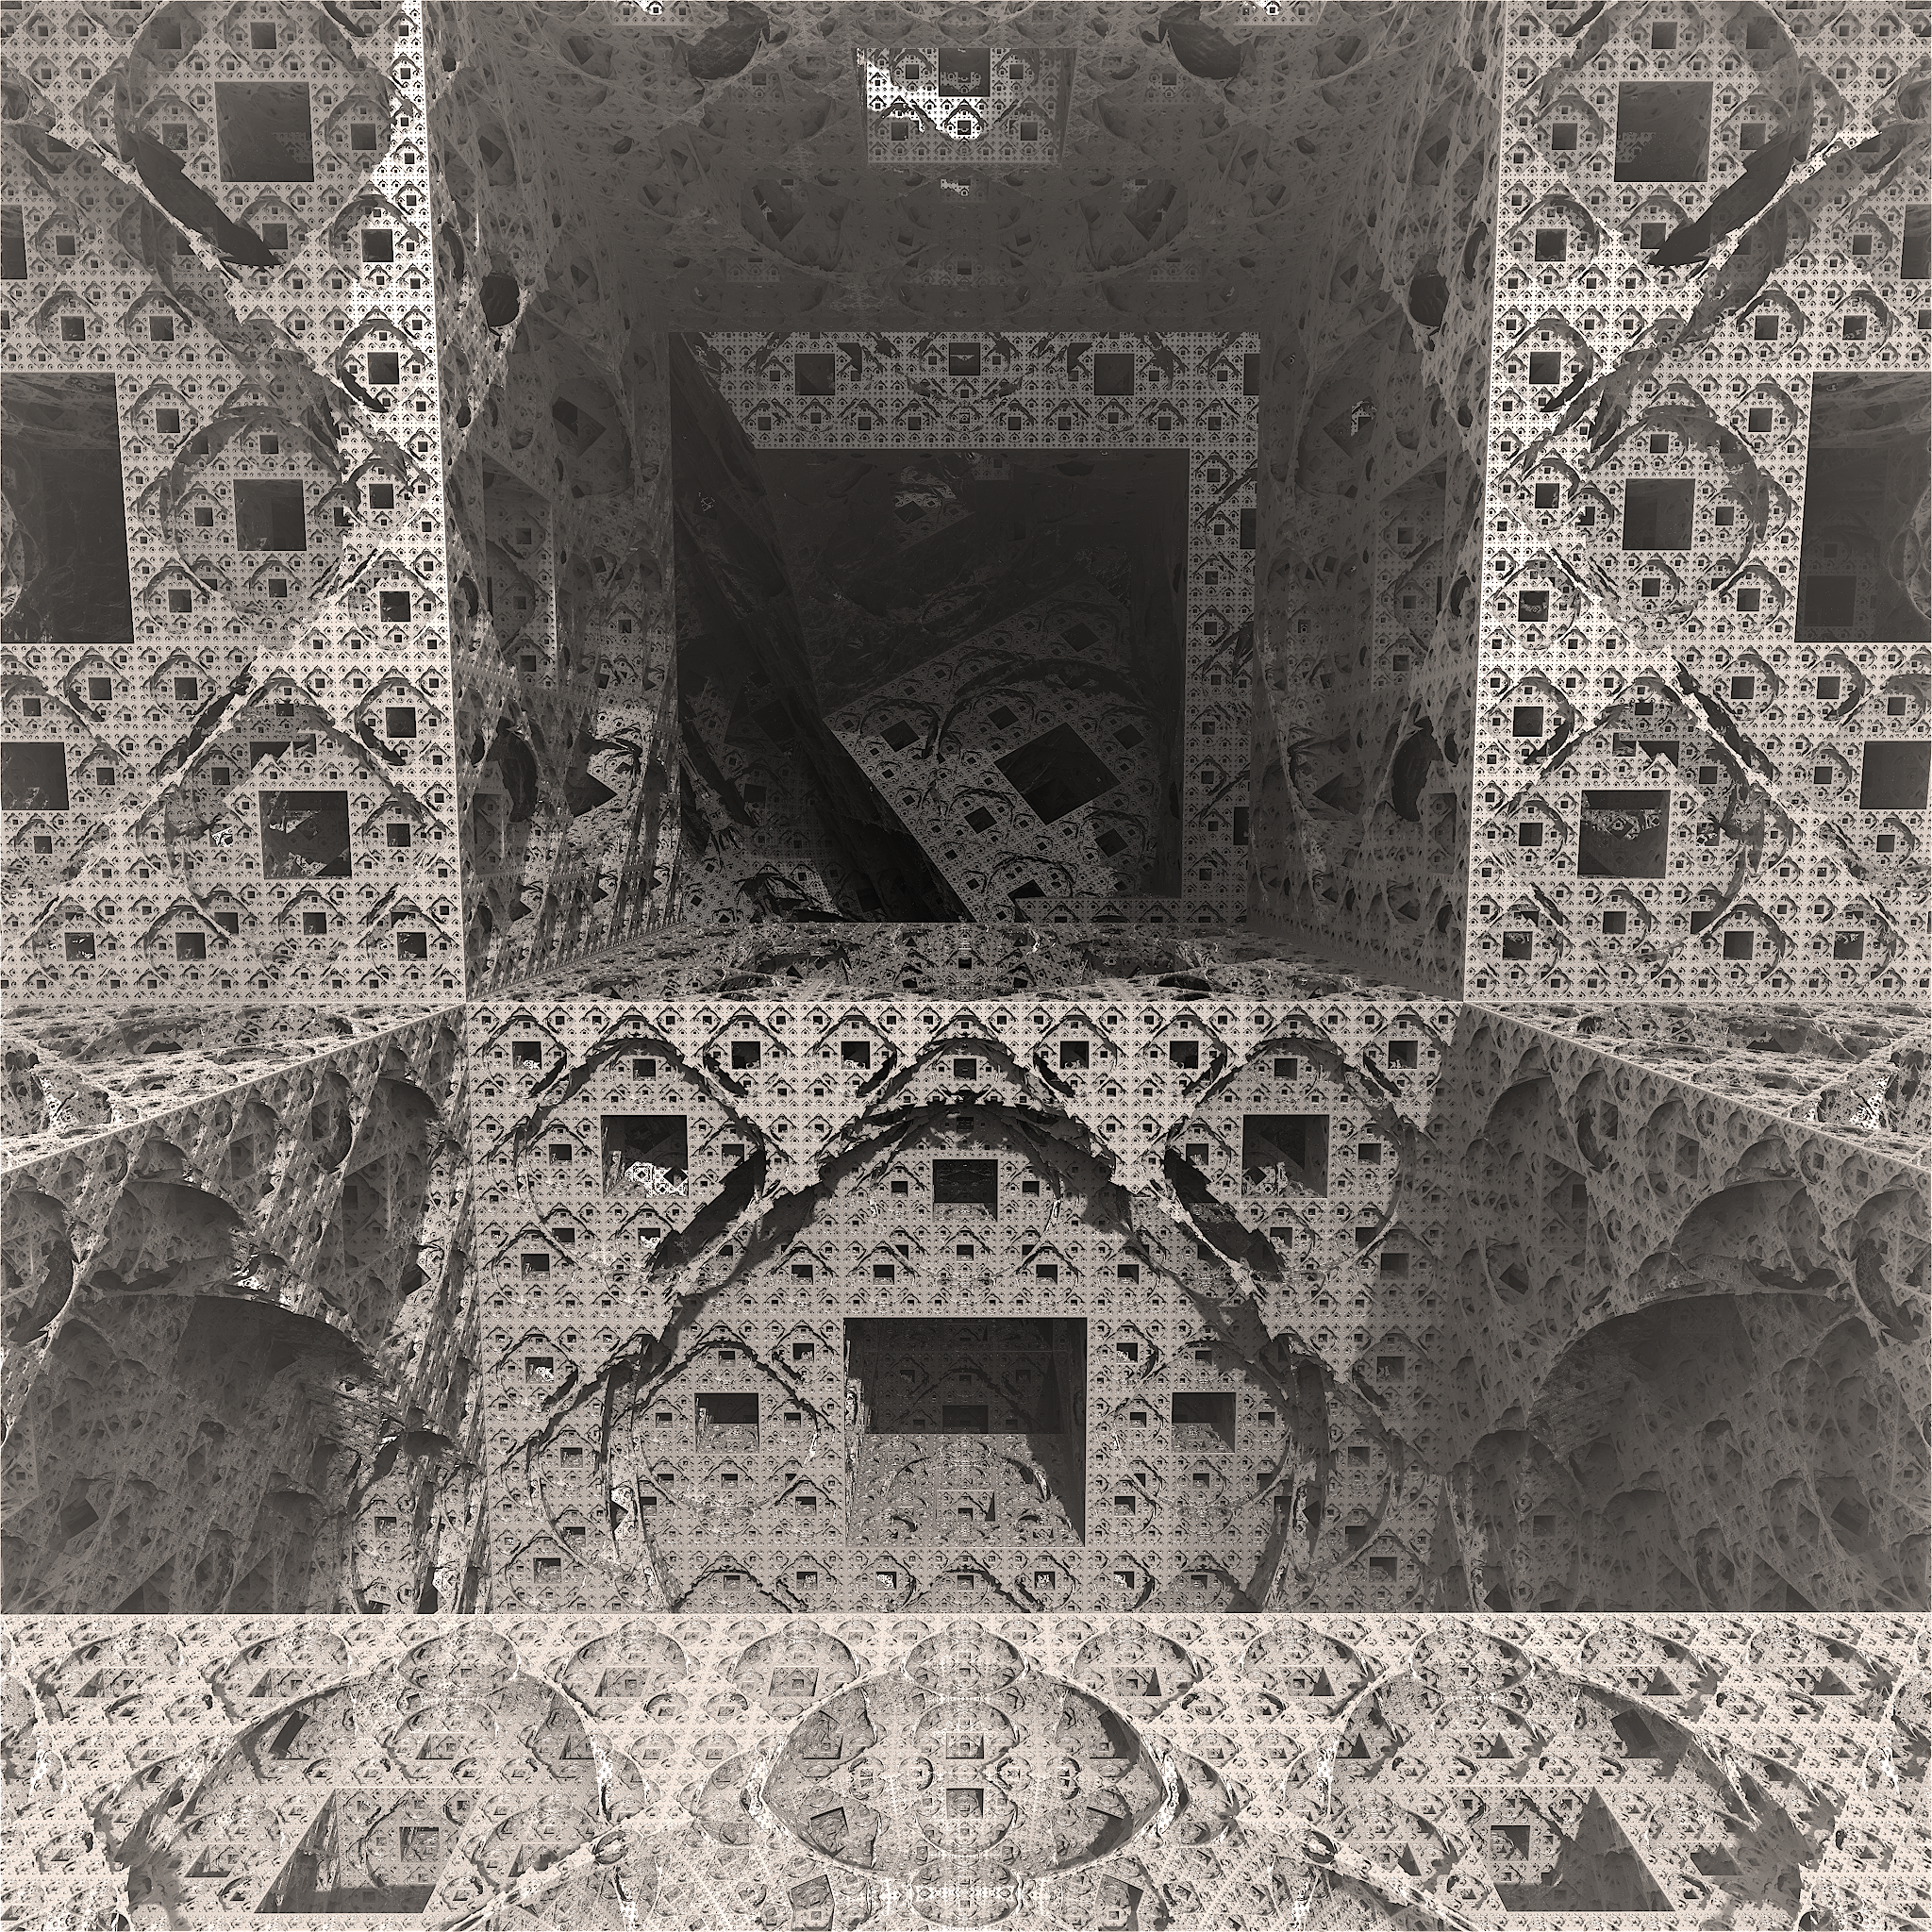 3Dフラクタル図形描画アプリケーション ソフトウェアのMandelbulberで描かれたMenger spongeの画像。 全体的に僅かに茶色味掛かった灰色の面で構成されている。 立方体と浅い円筒が組み合わさった形状の大小様々な幾何学的な穴が規則的かつ緻密に無数に空いている。